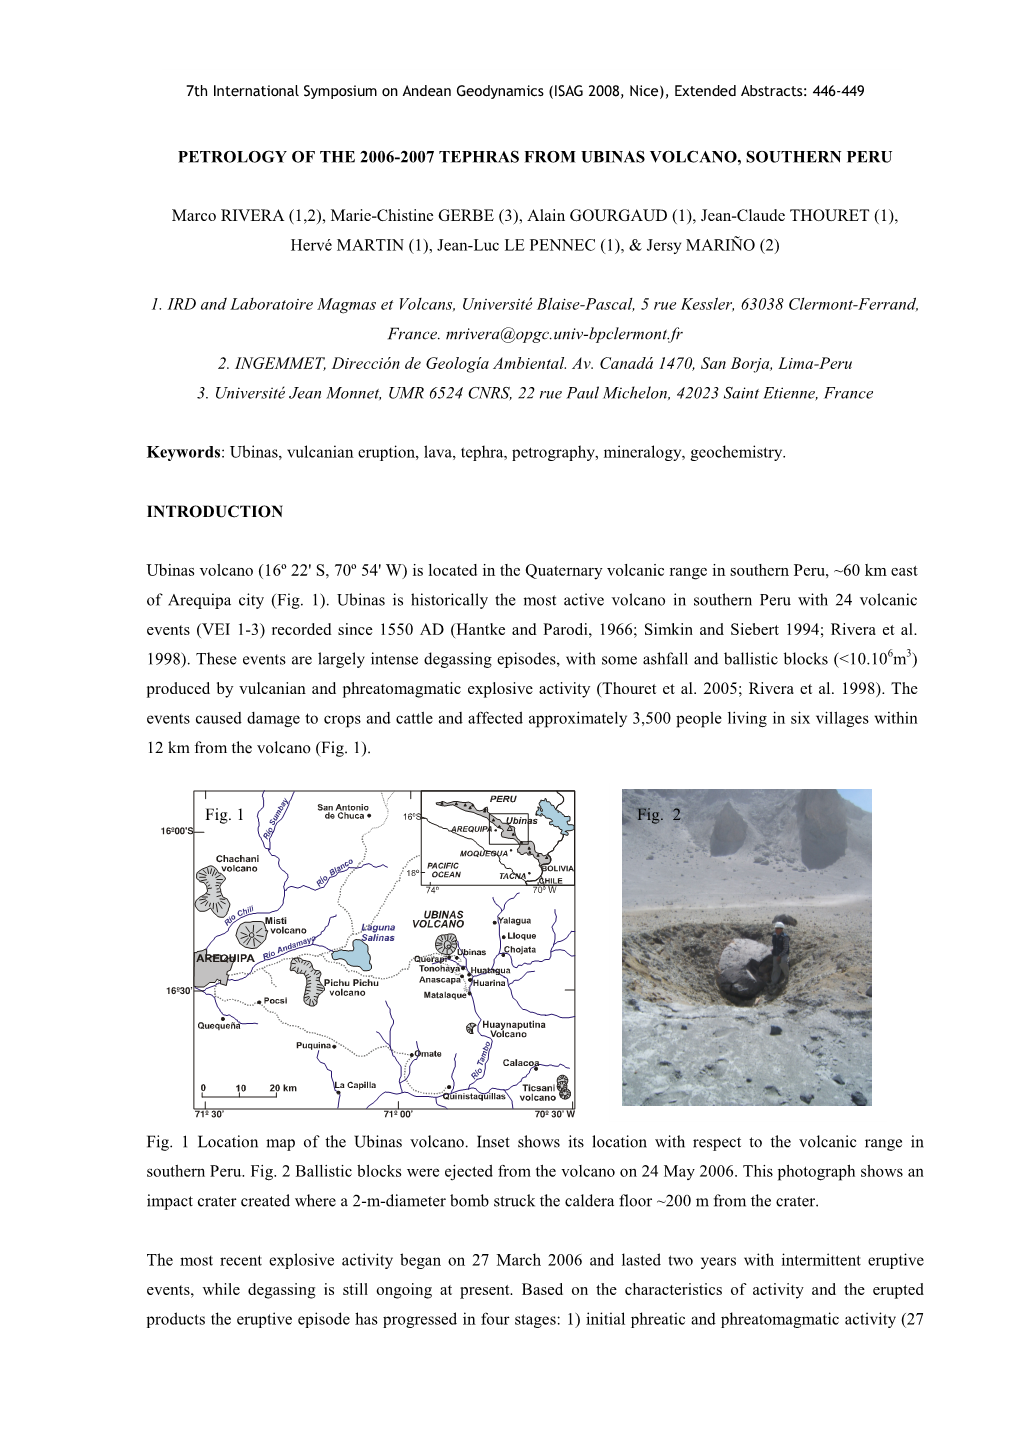 Petrology of the 2006-2007 Tephras from Ubinas Volcano, Southern Peru